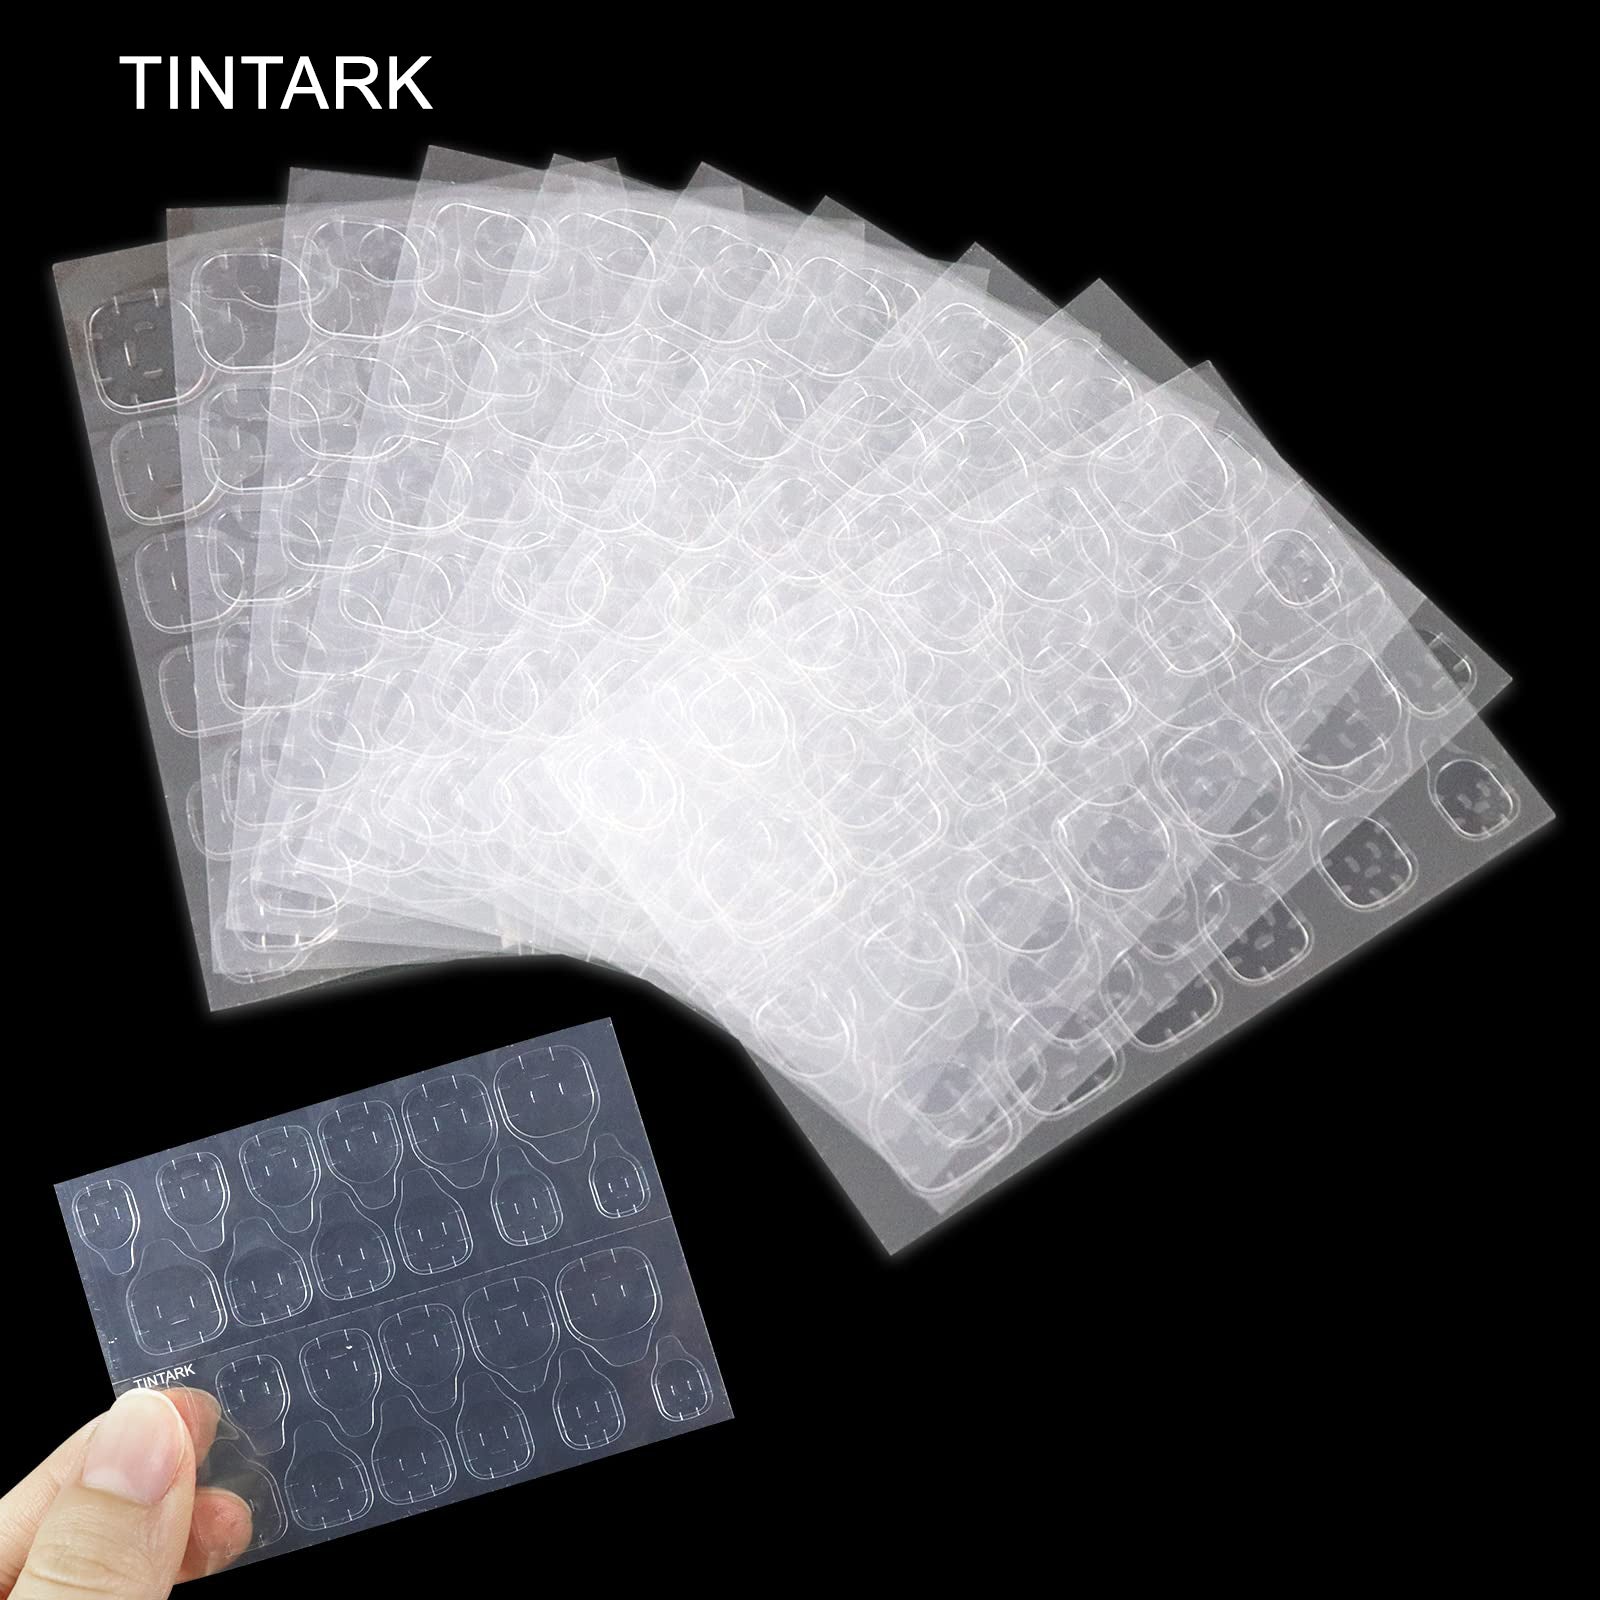 TINTARK Nail Glue Sticker Double-Sided Nail Adhesive Stickers Thin Bre –  TINTARK COSMETICS